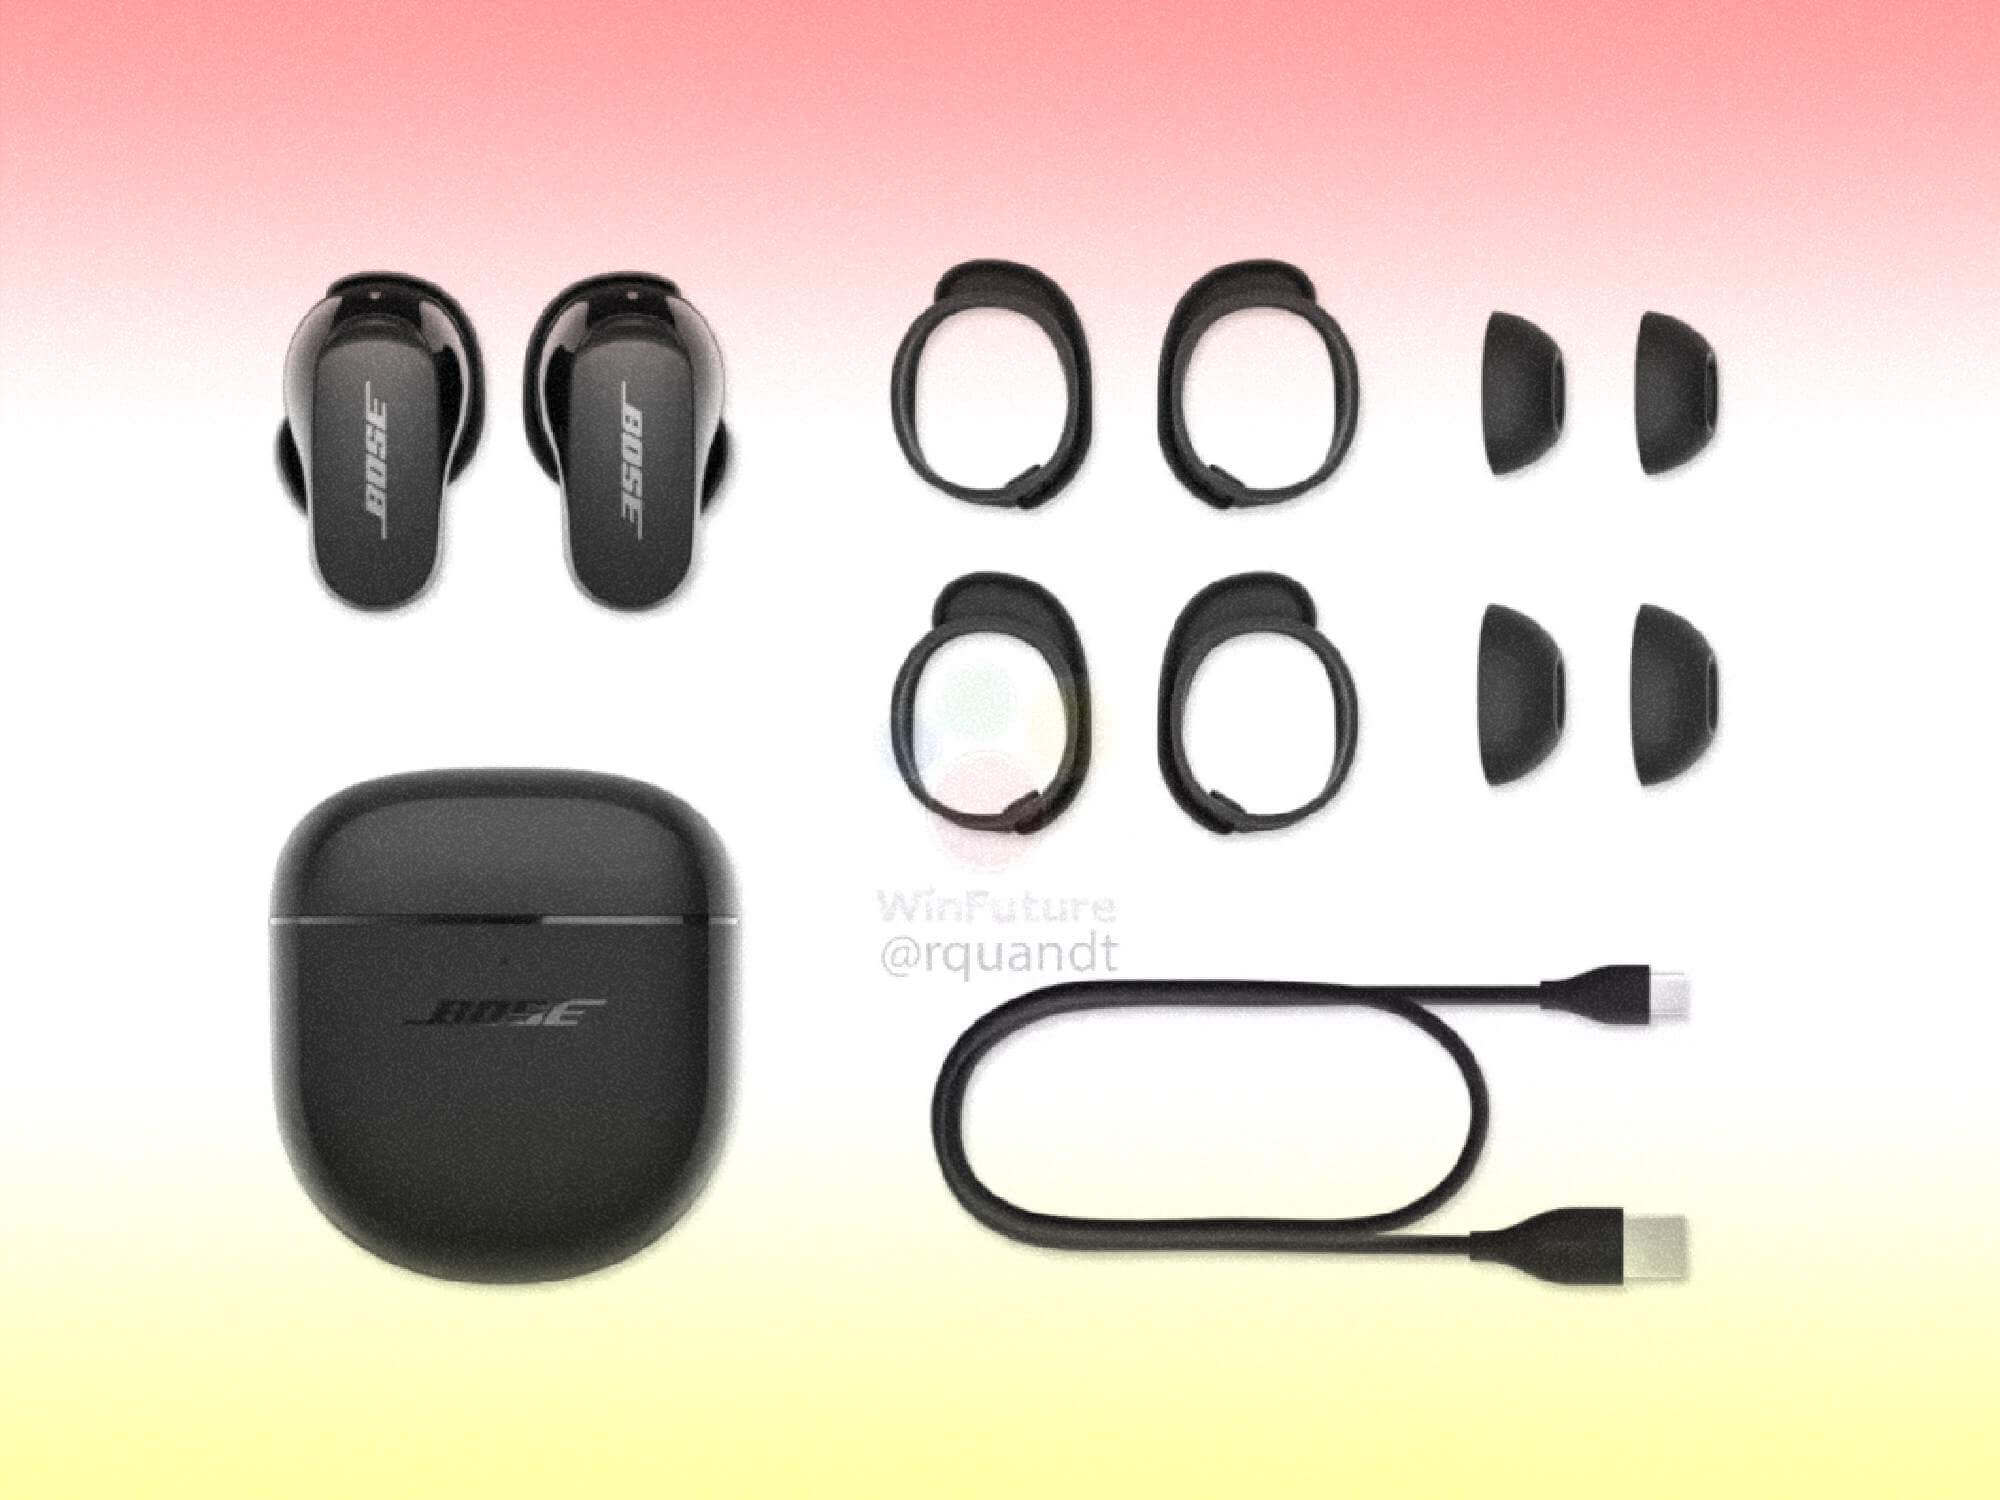 Bose QuietComfort Earbuds 2 may arrive in September, leak suggests